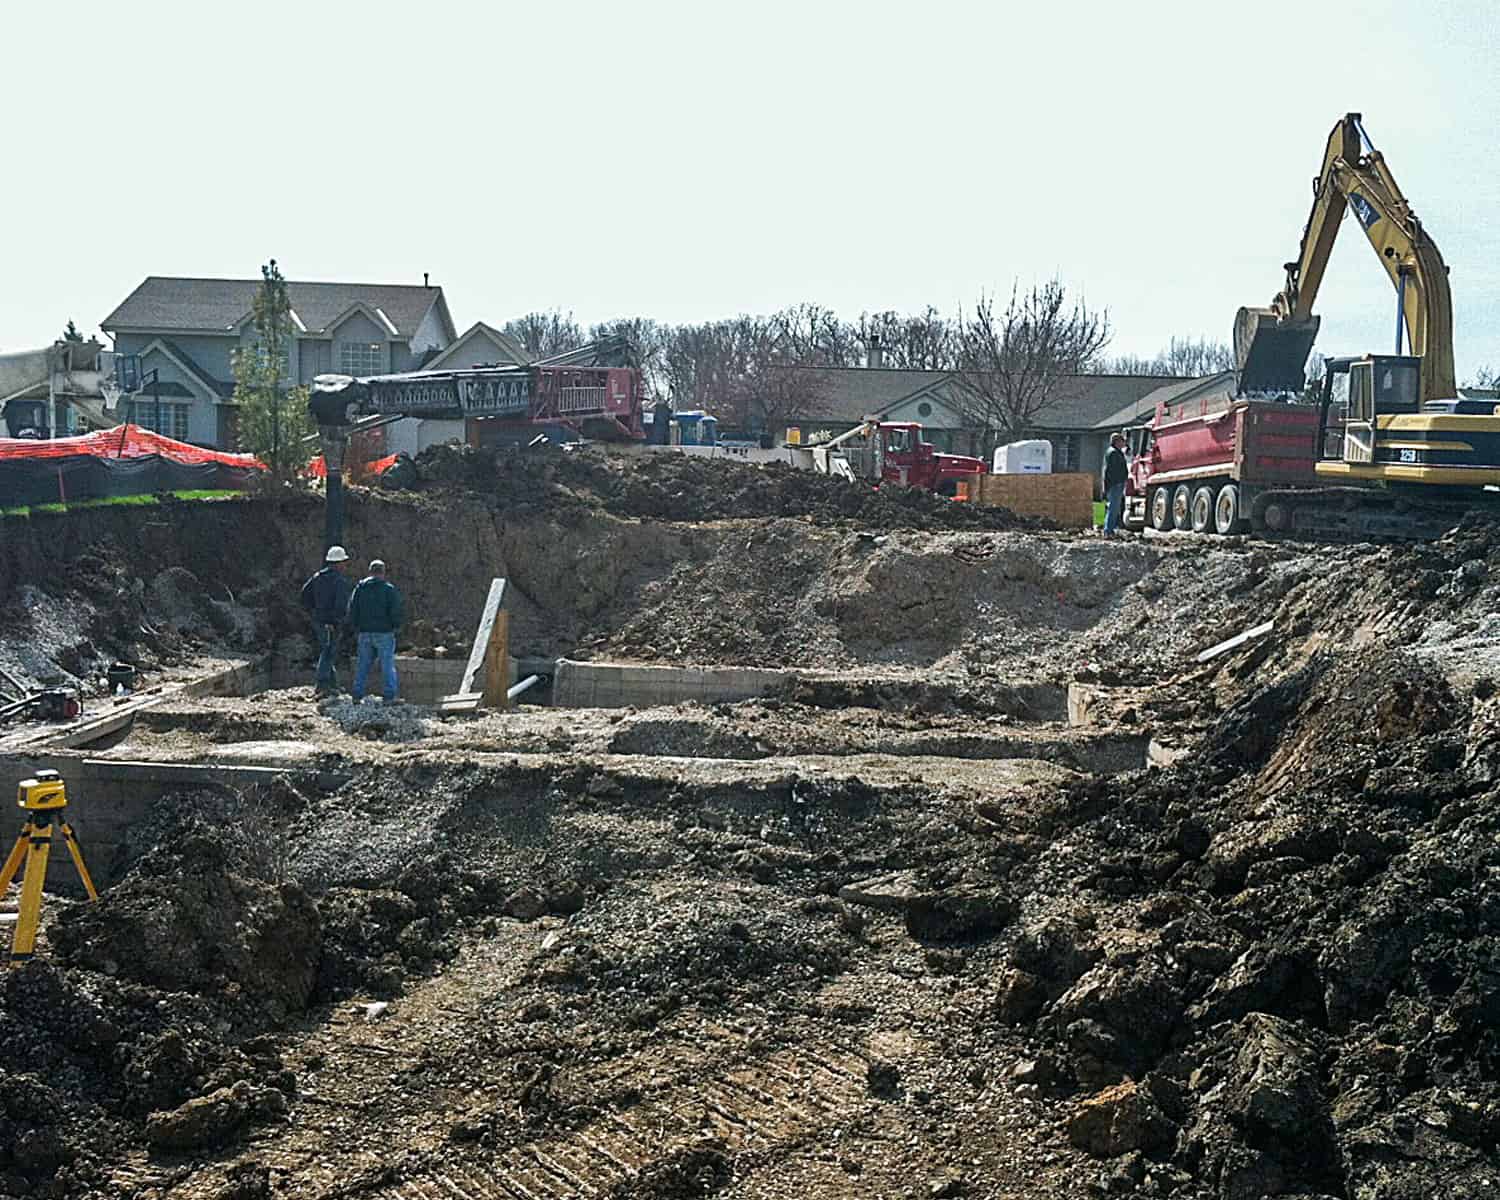 Lemel Homes Teardown, Rebuild, & Infill - Fire Rebuild - Foundation Excavation